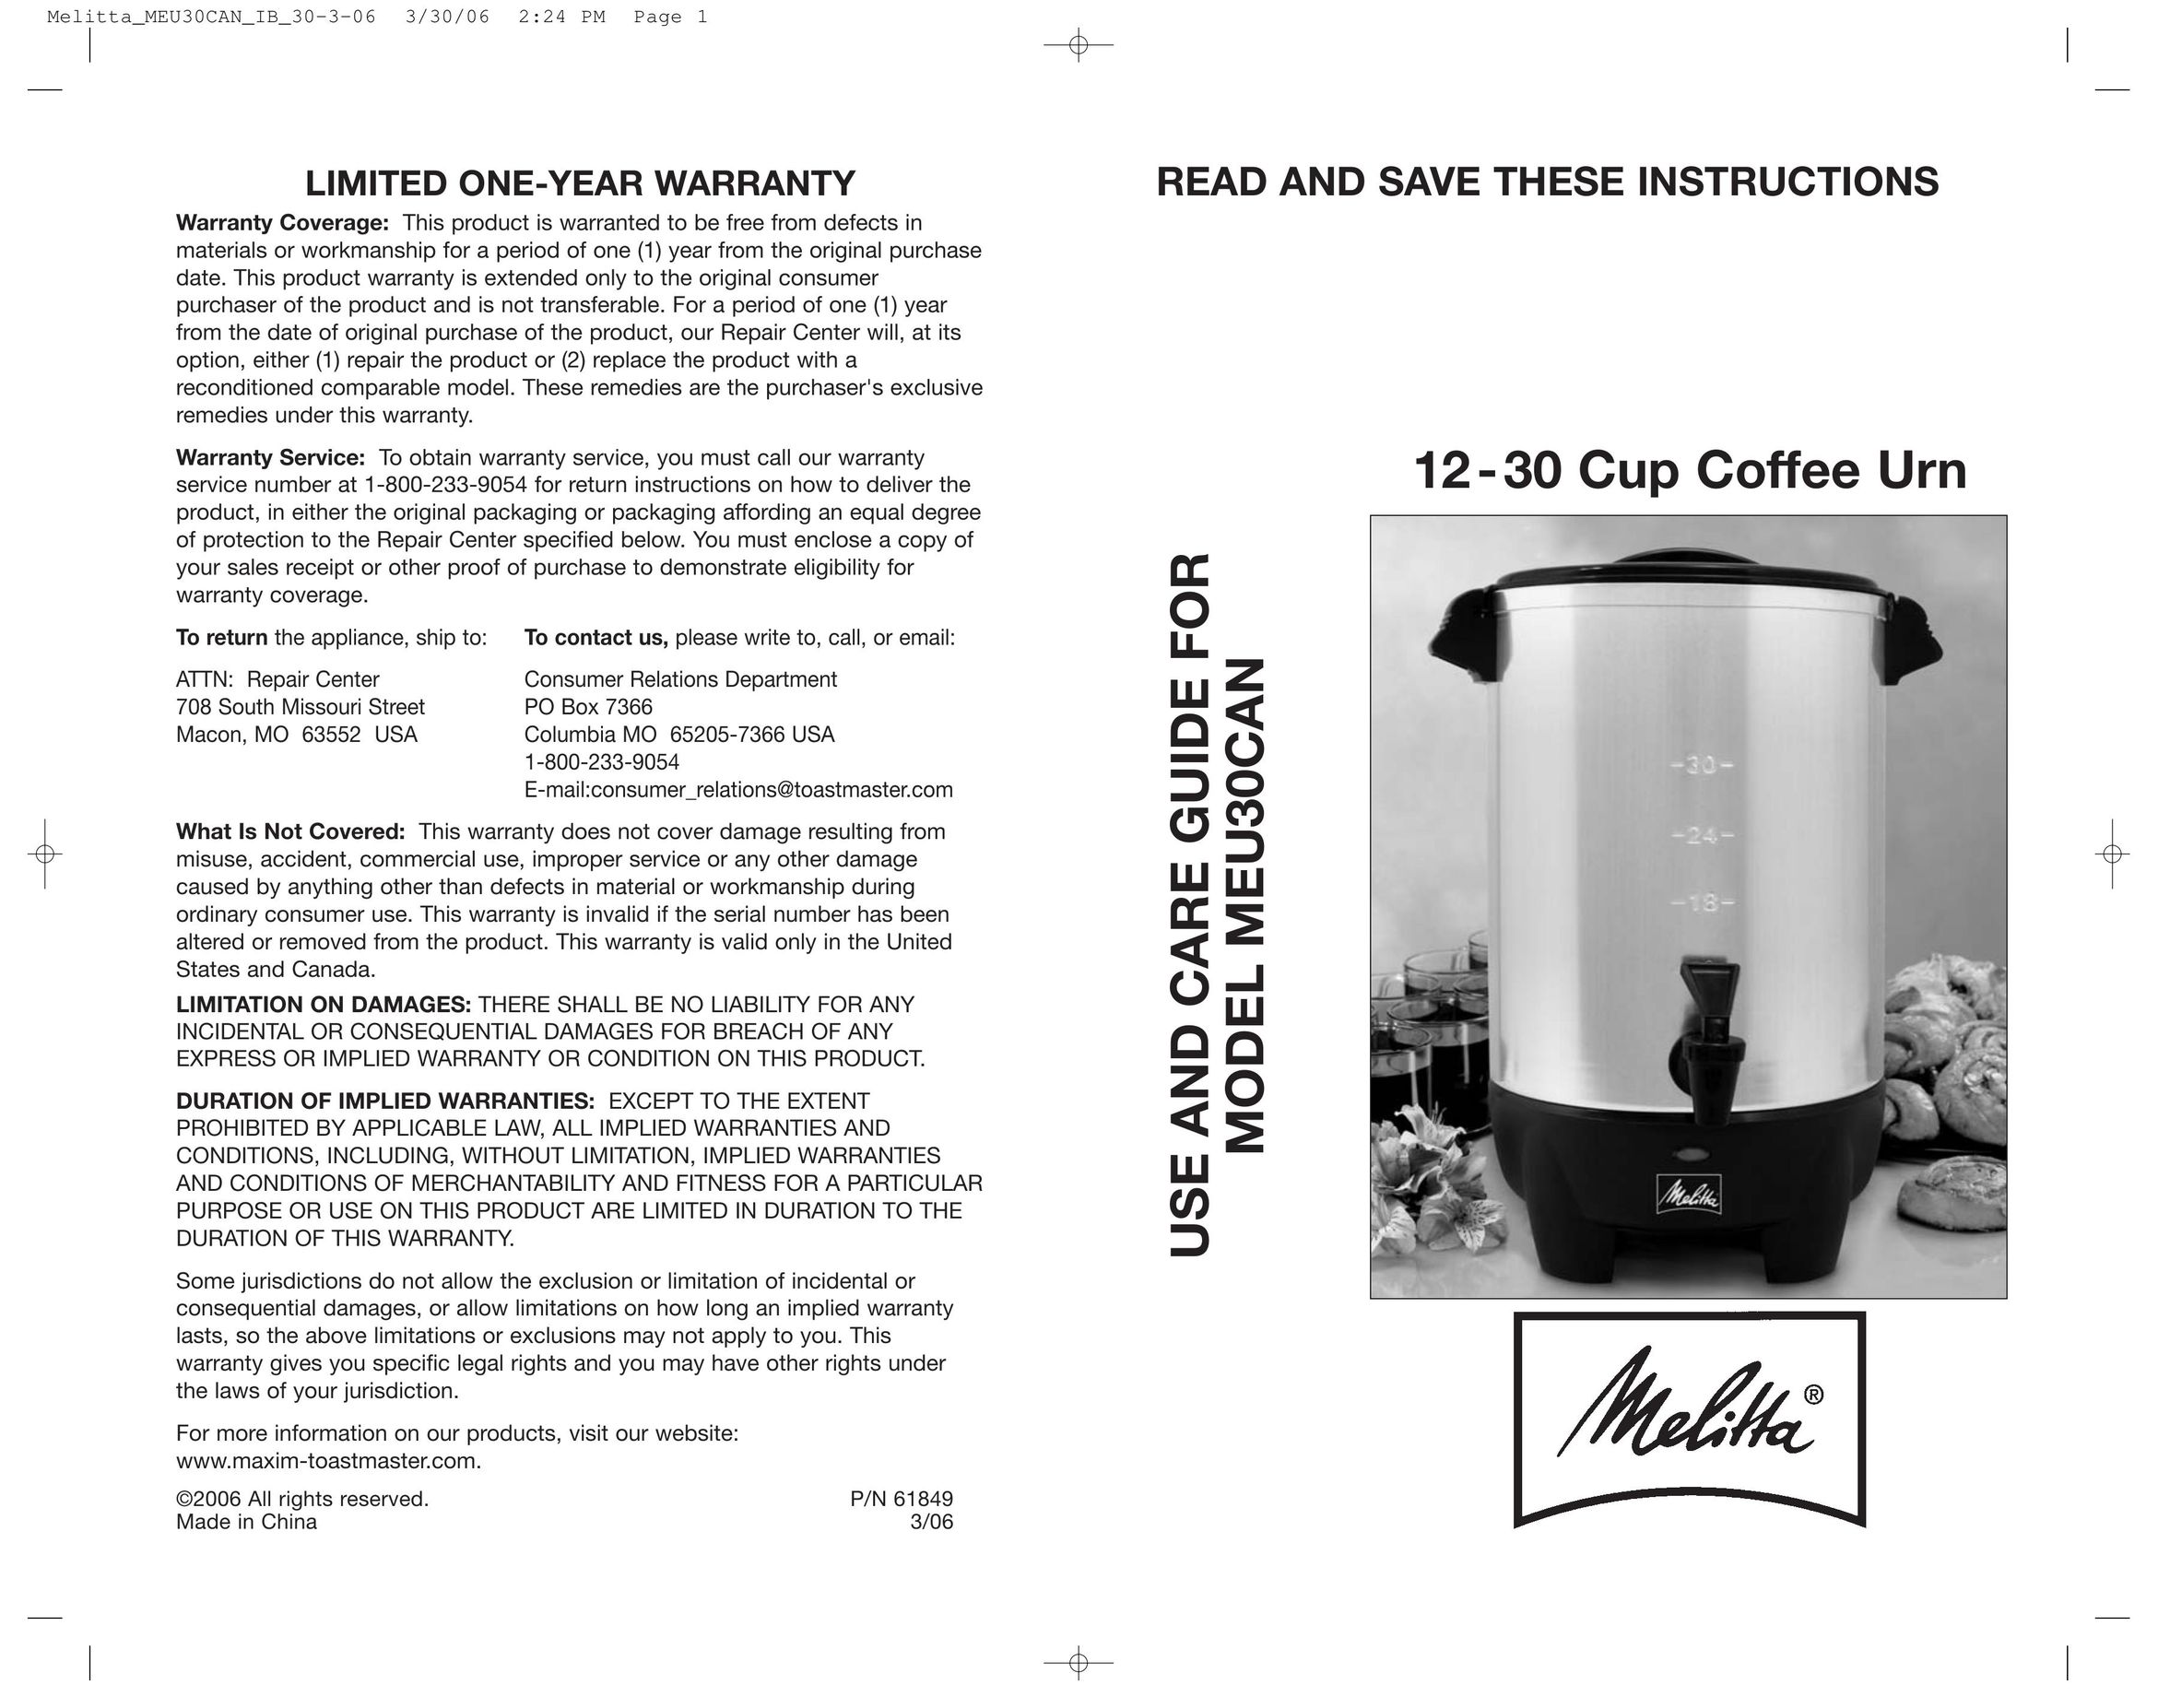 Toastmaster MEU30CAN Coffeemaker User Manual